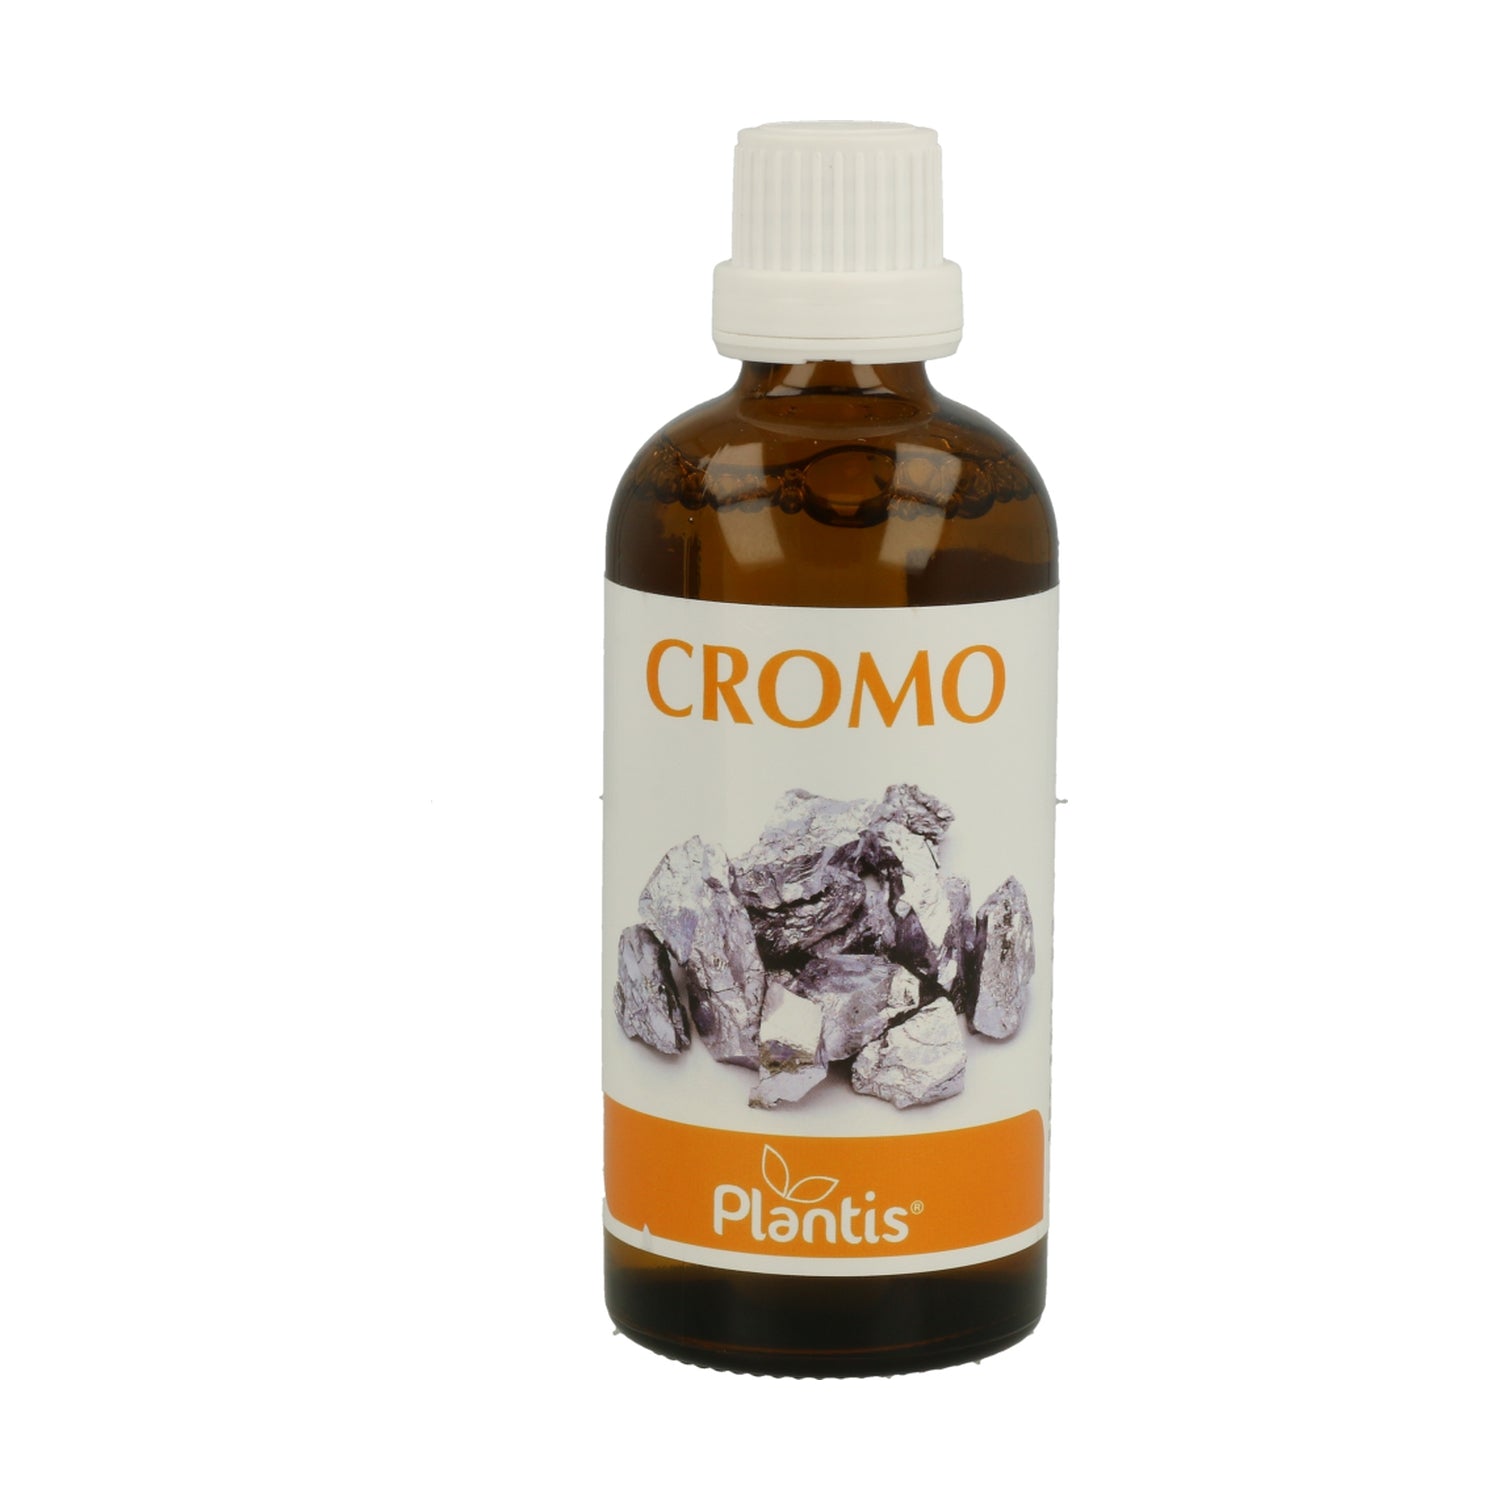 Plantis-Cromo-Phytoligo-100Ml-Biopharmacia,-Parafarmacia-online